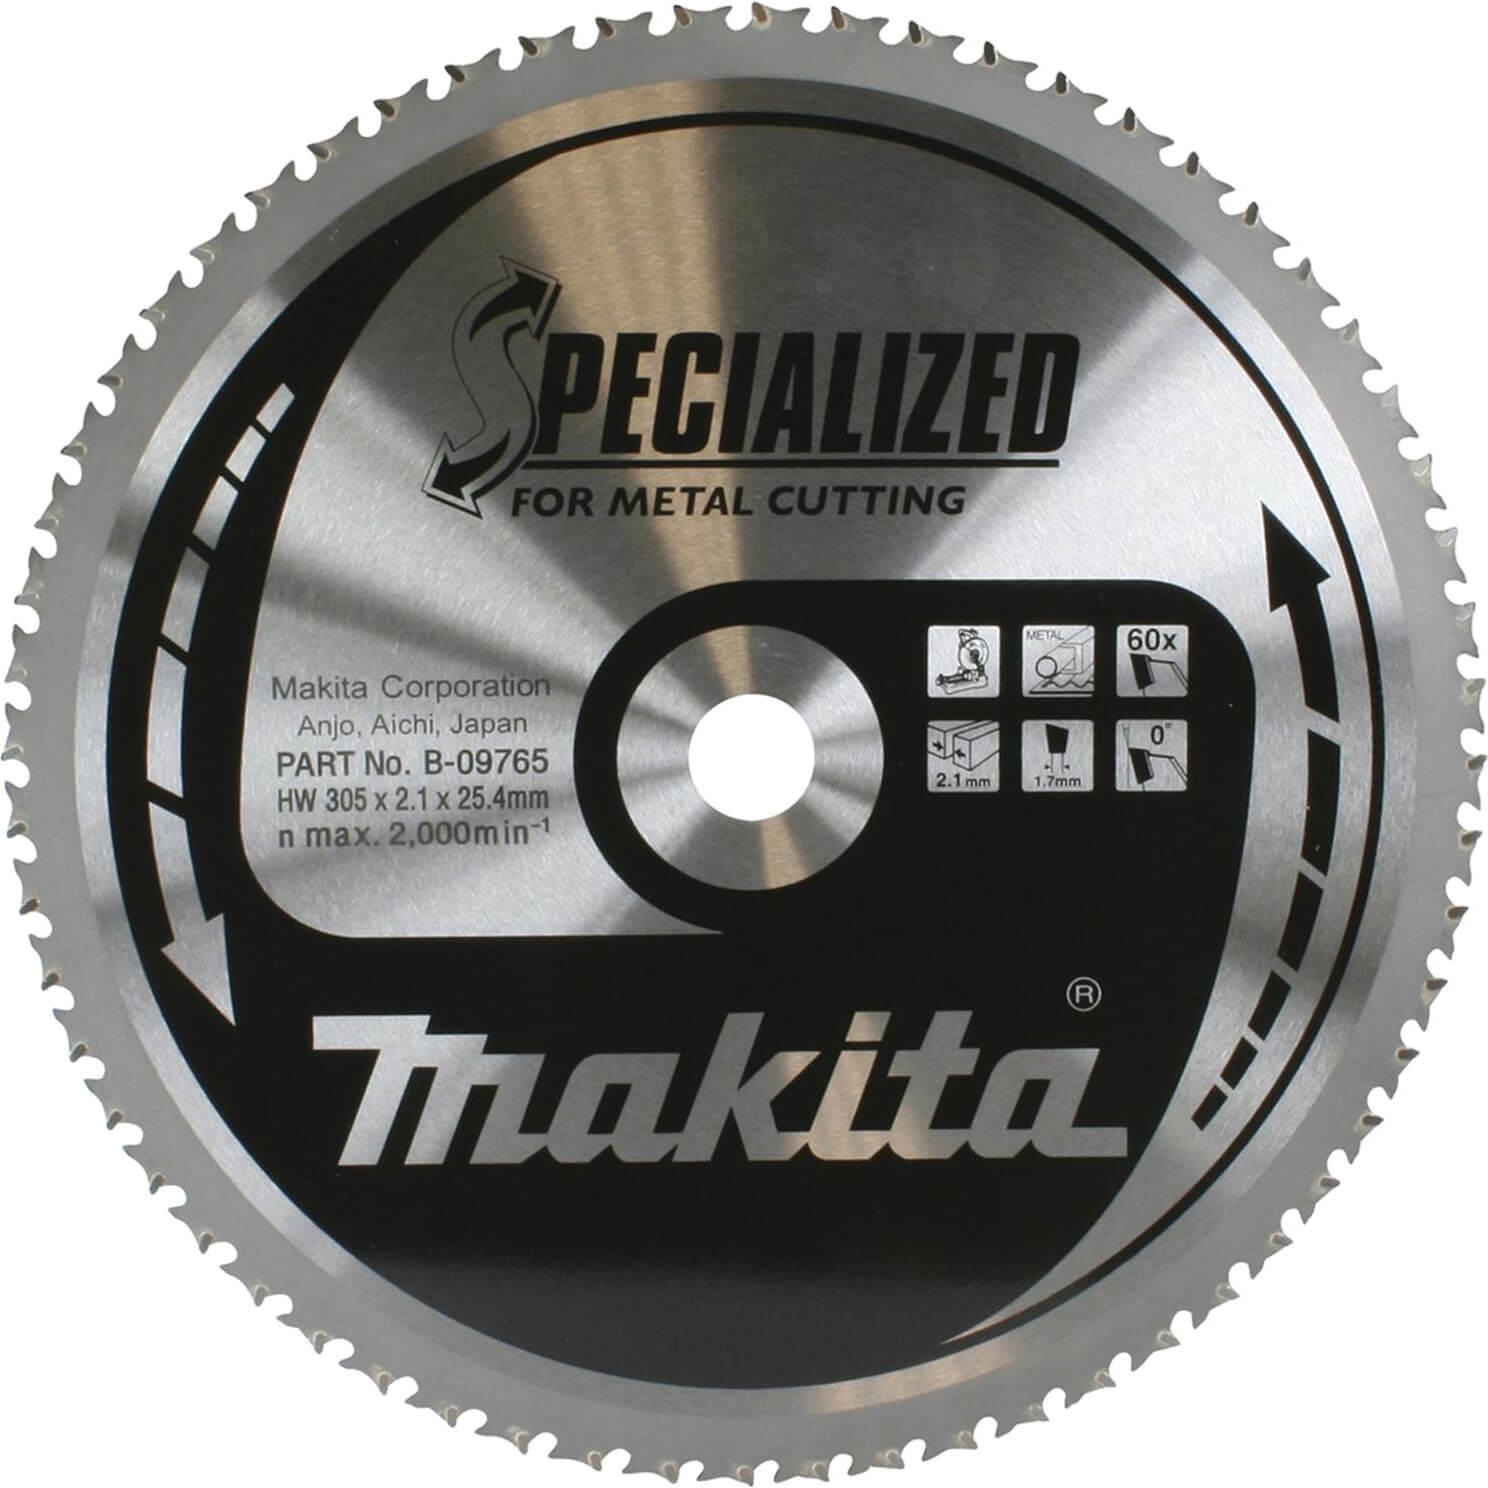 Makita USA - Product Details -4131